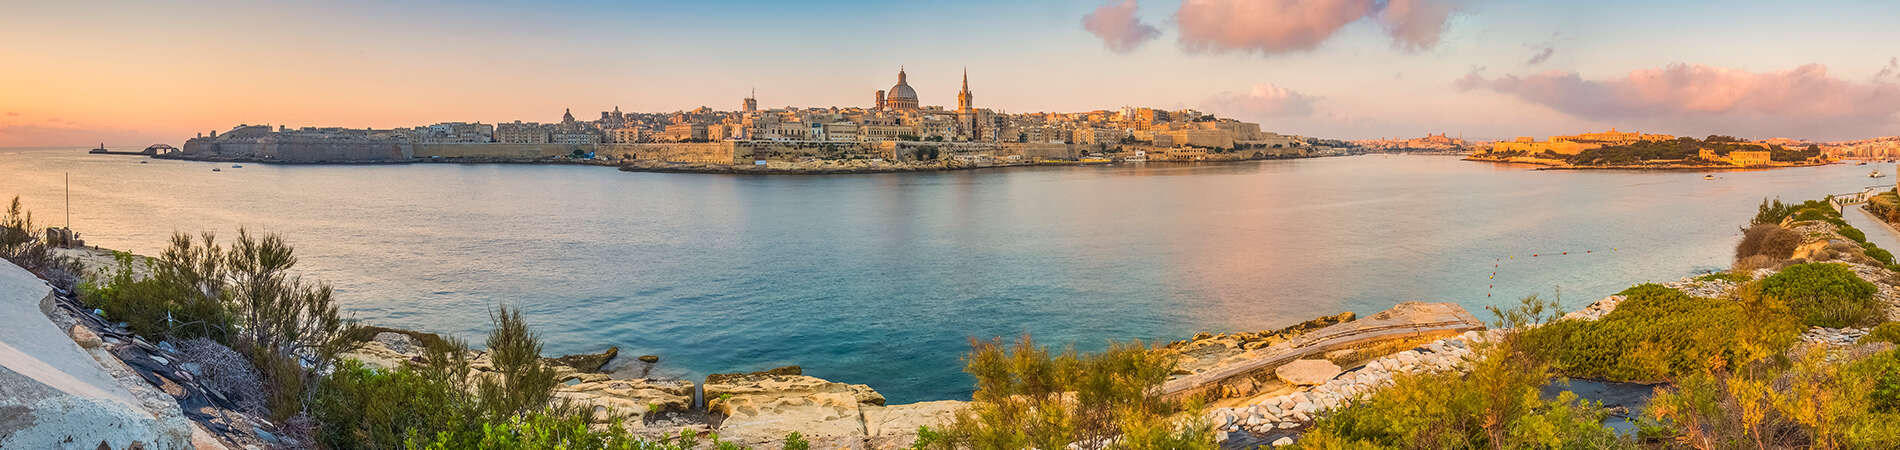 Why Malta?